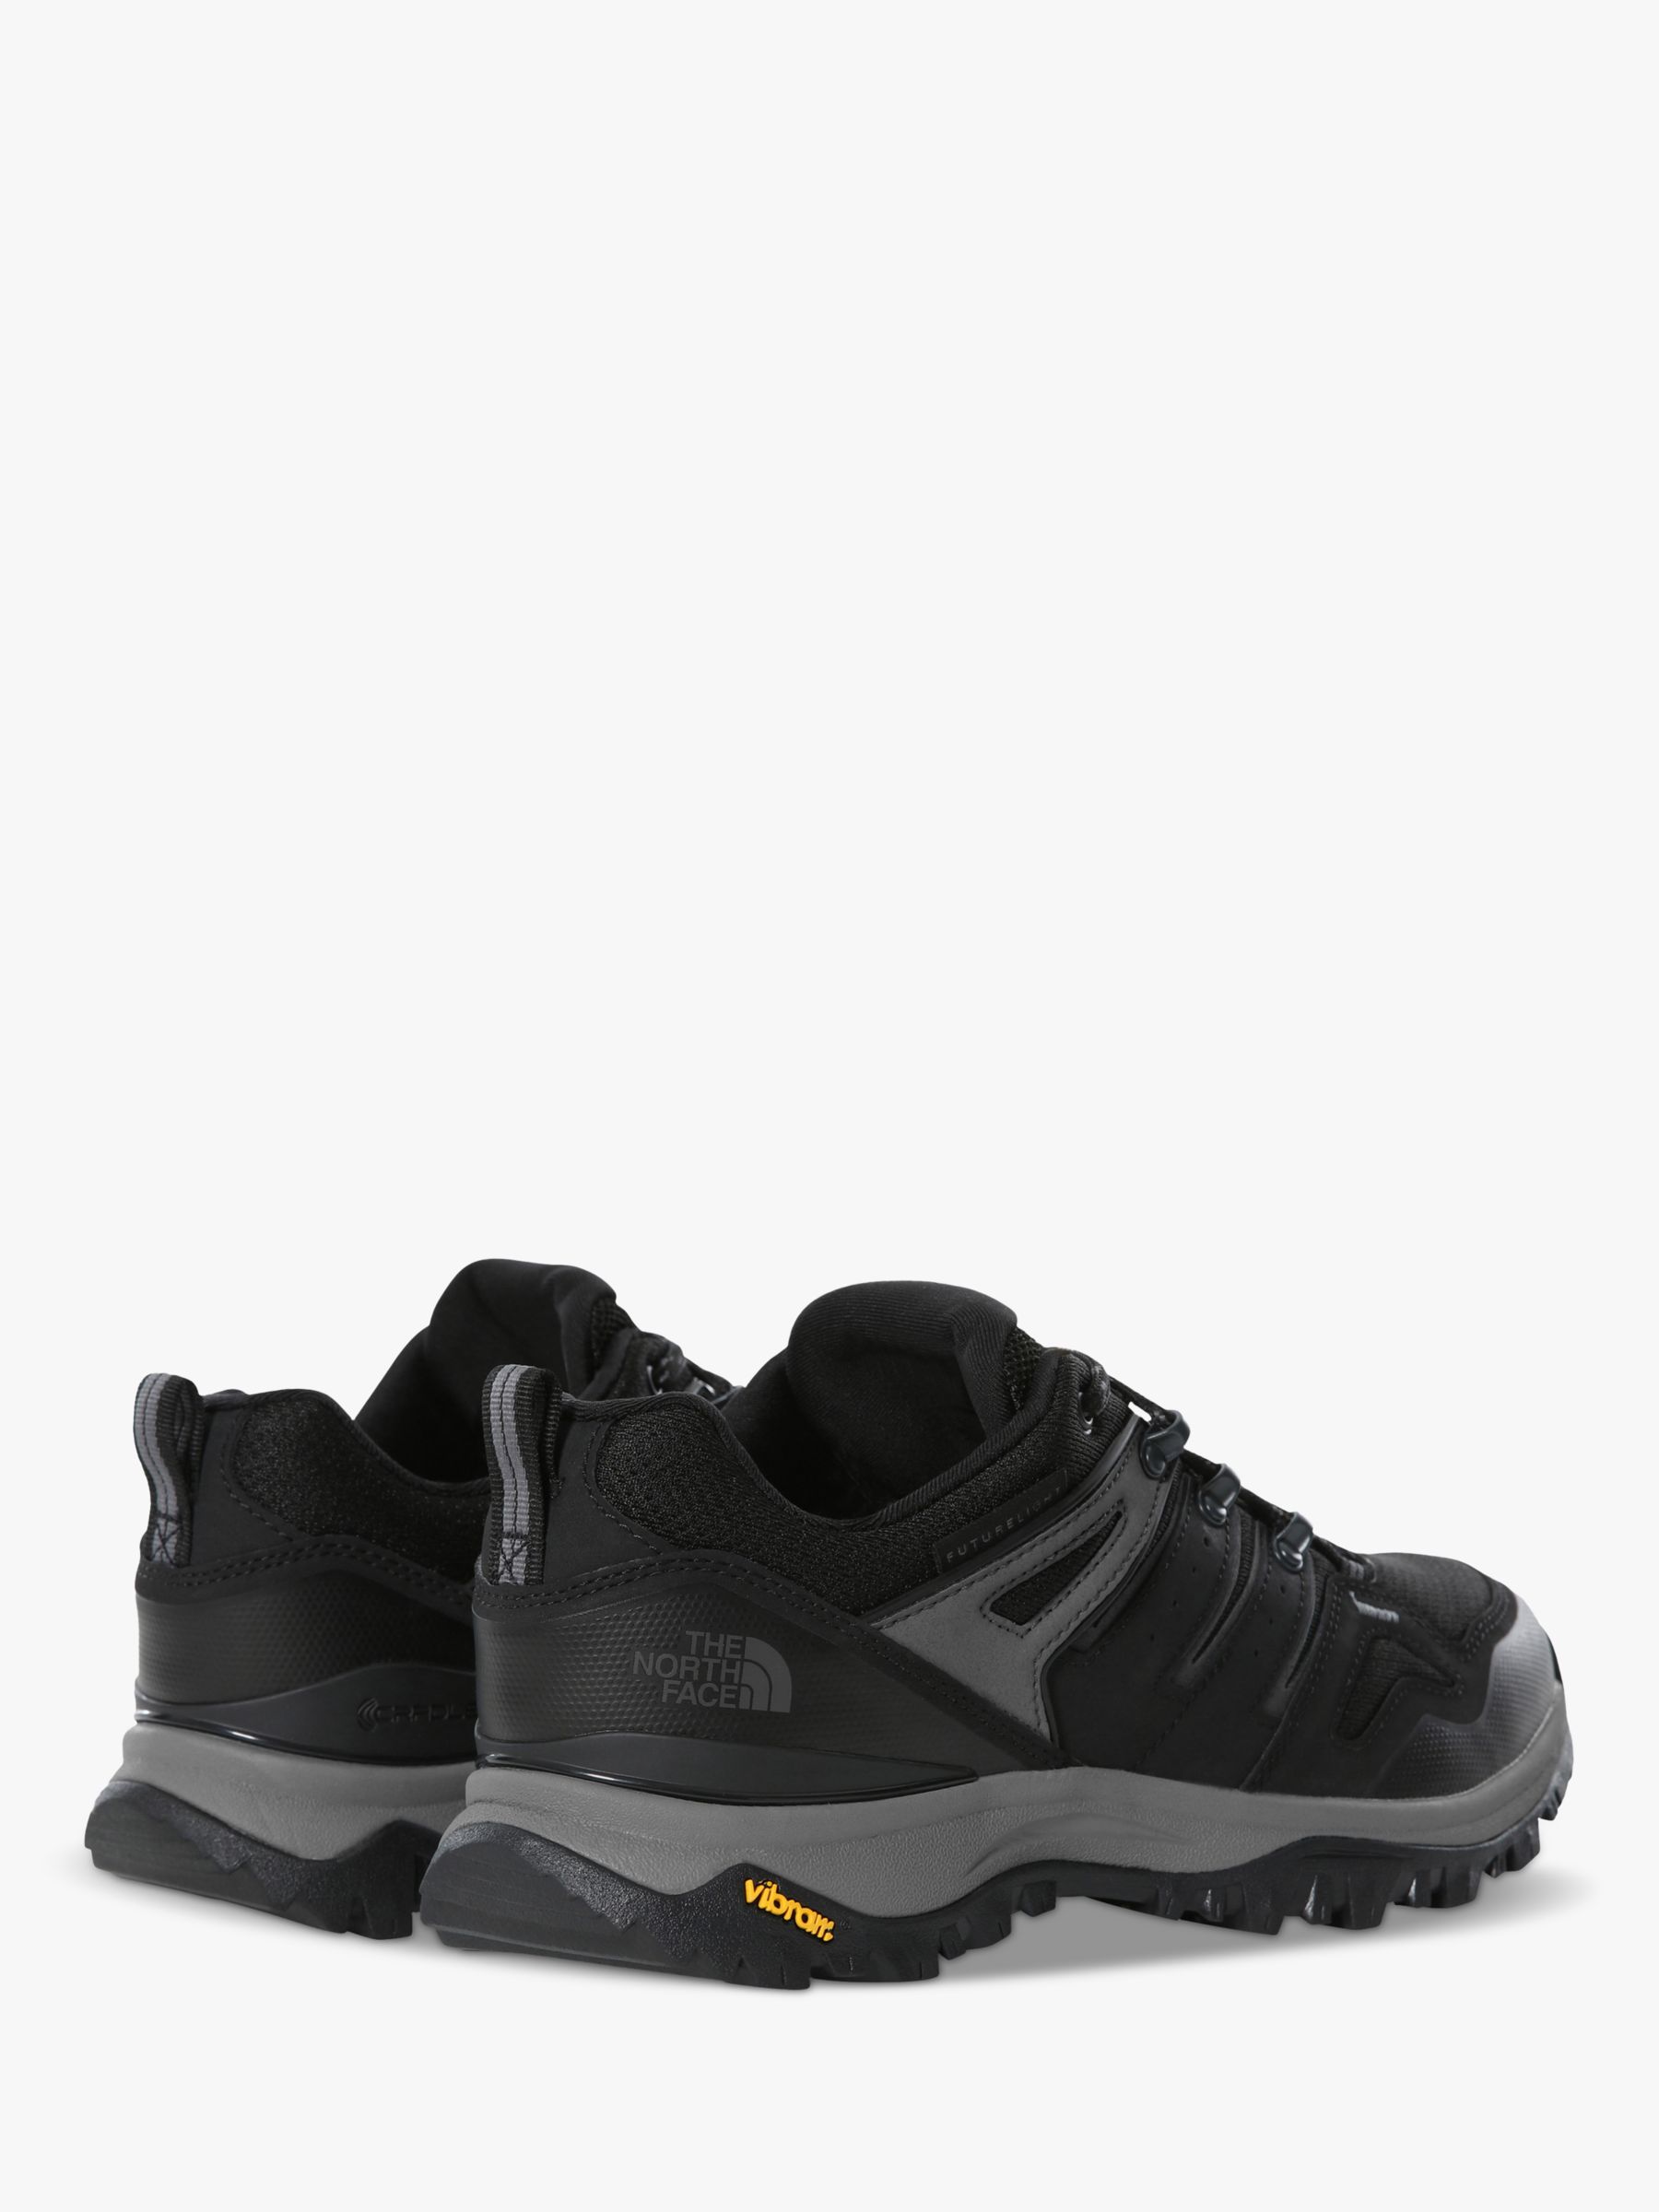 The North Face Hedgehog Futurelight Hiking Shoes, Black/Zinc Grey, 9